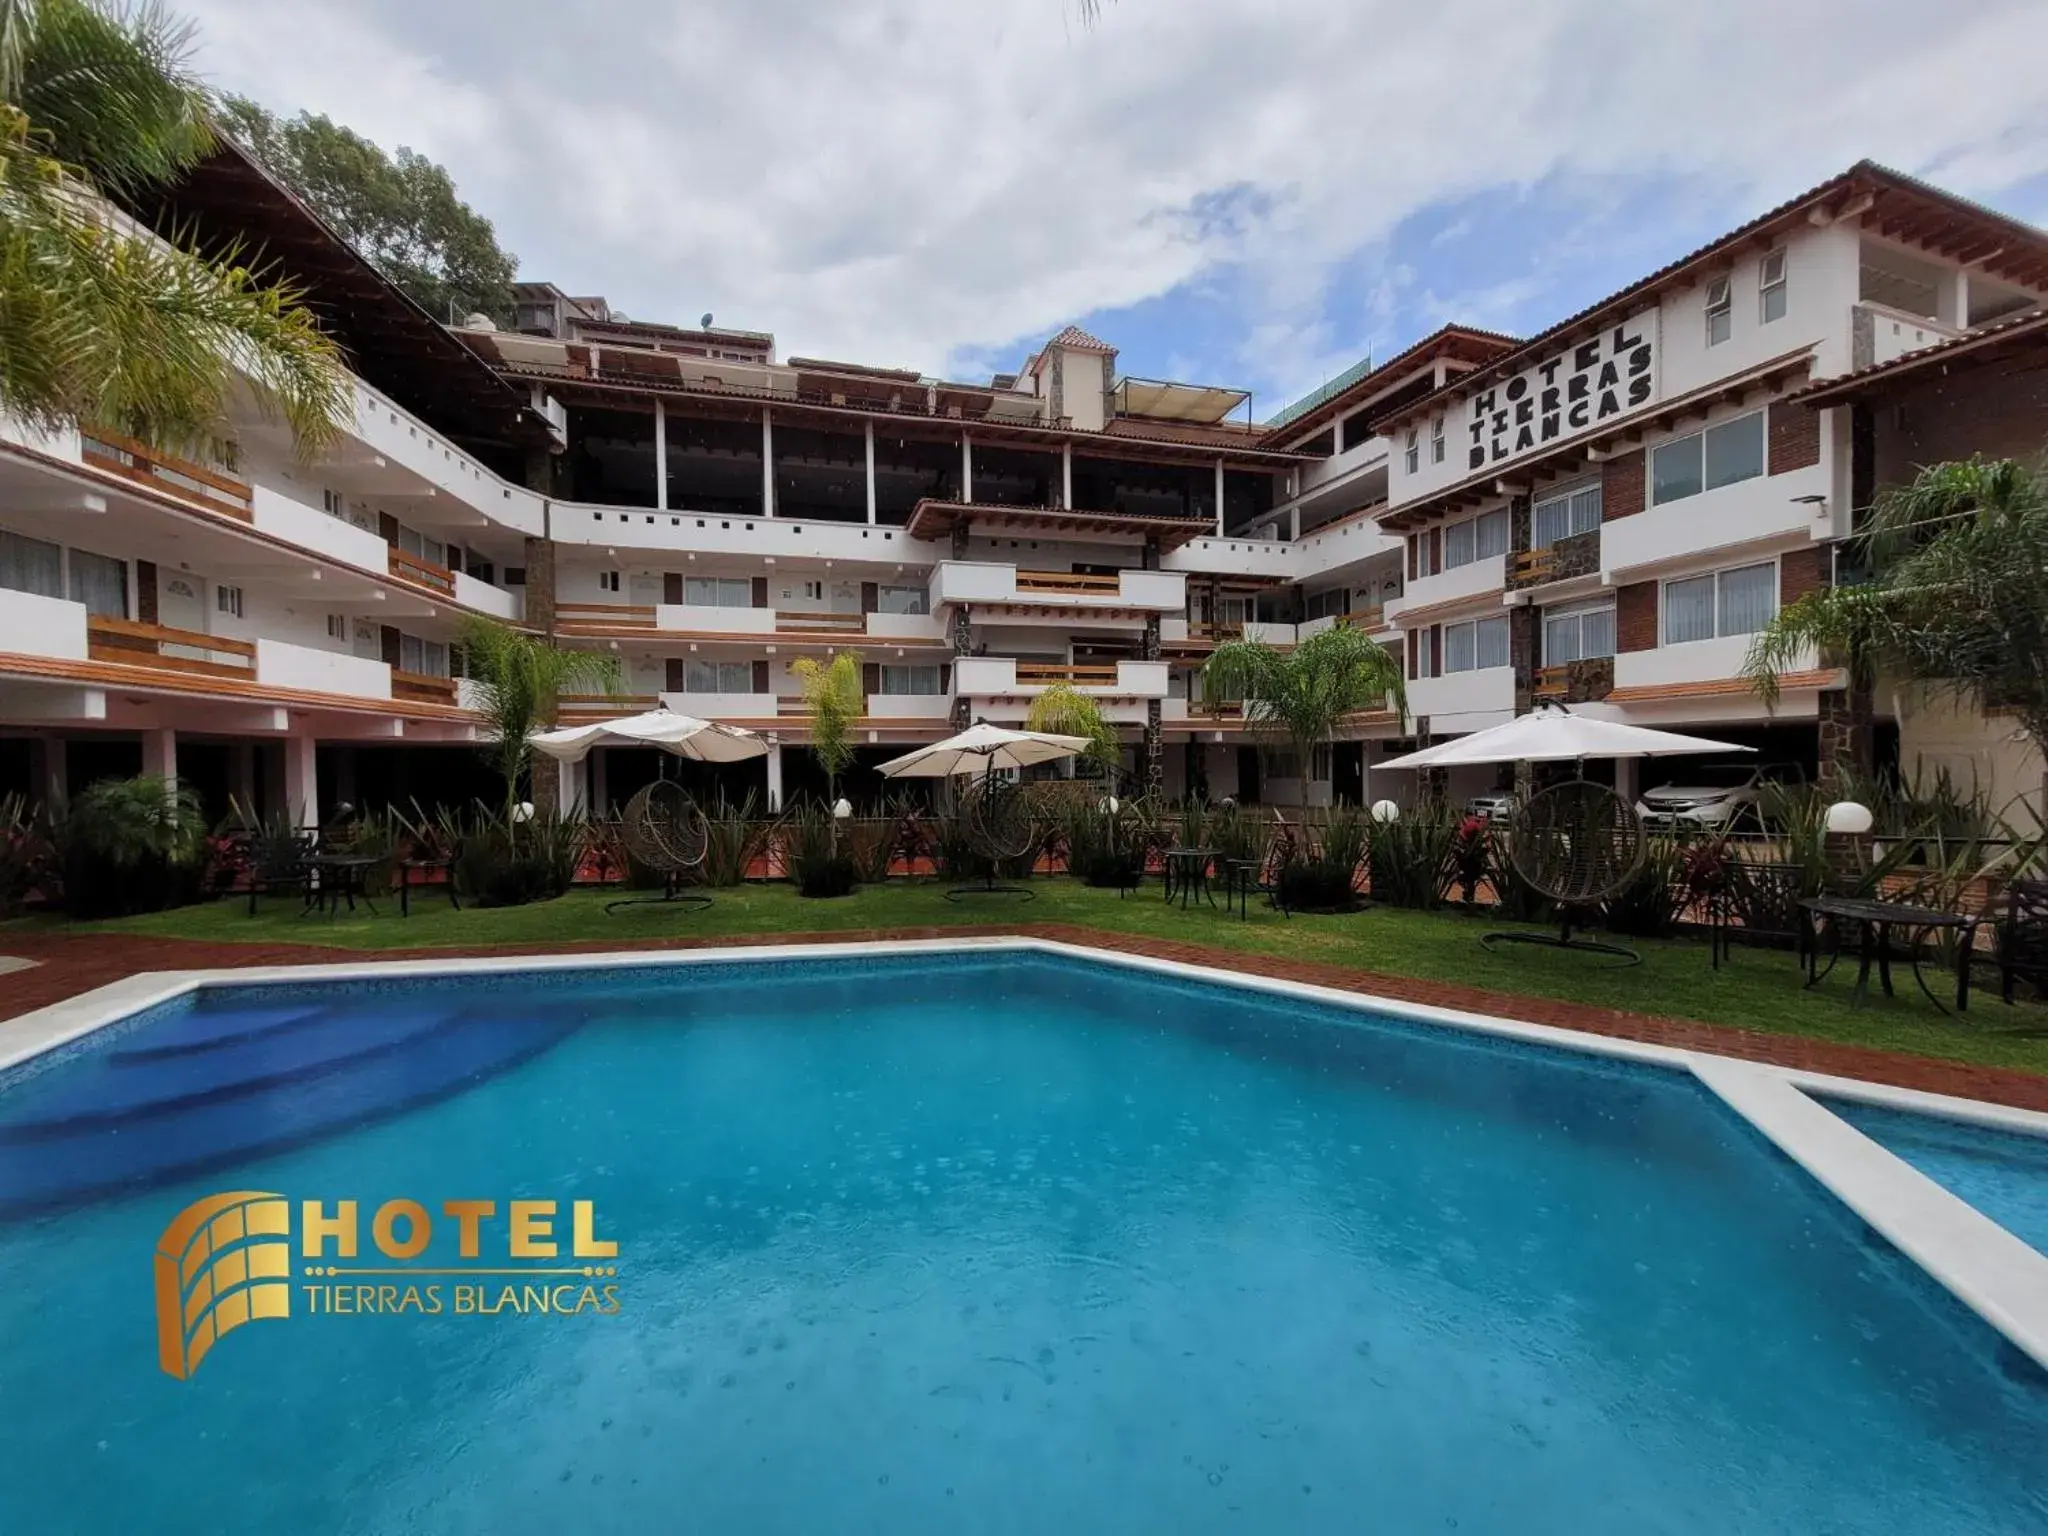 Swimming Pool in Hotel Tierras Blancas